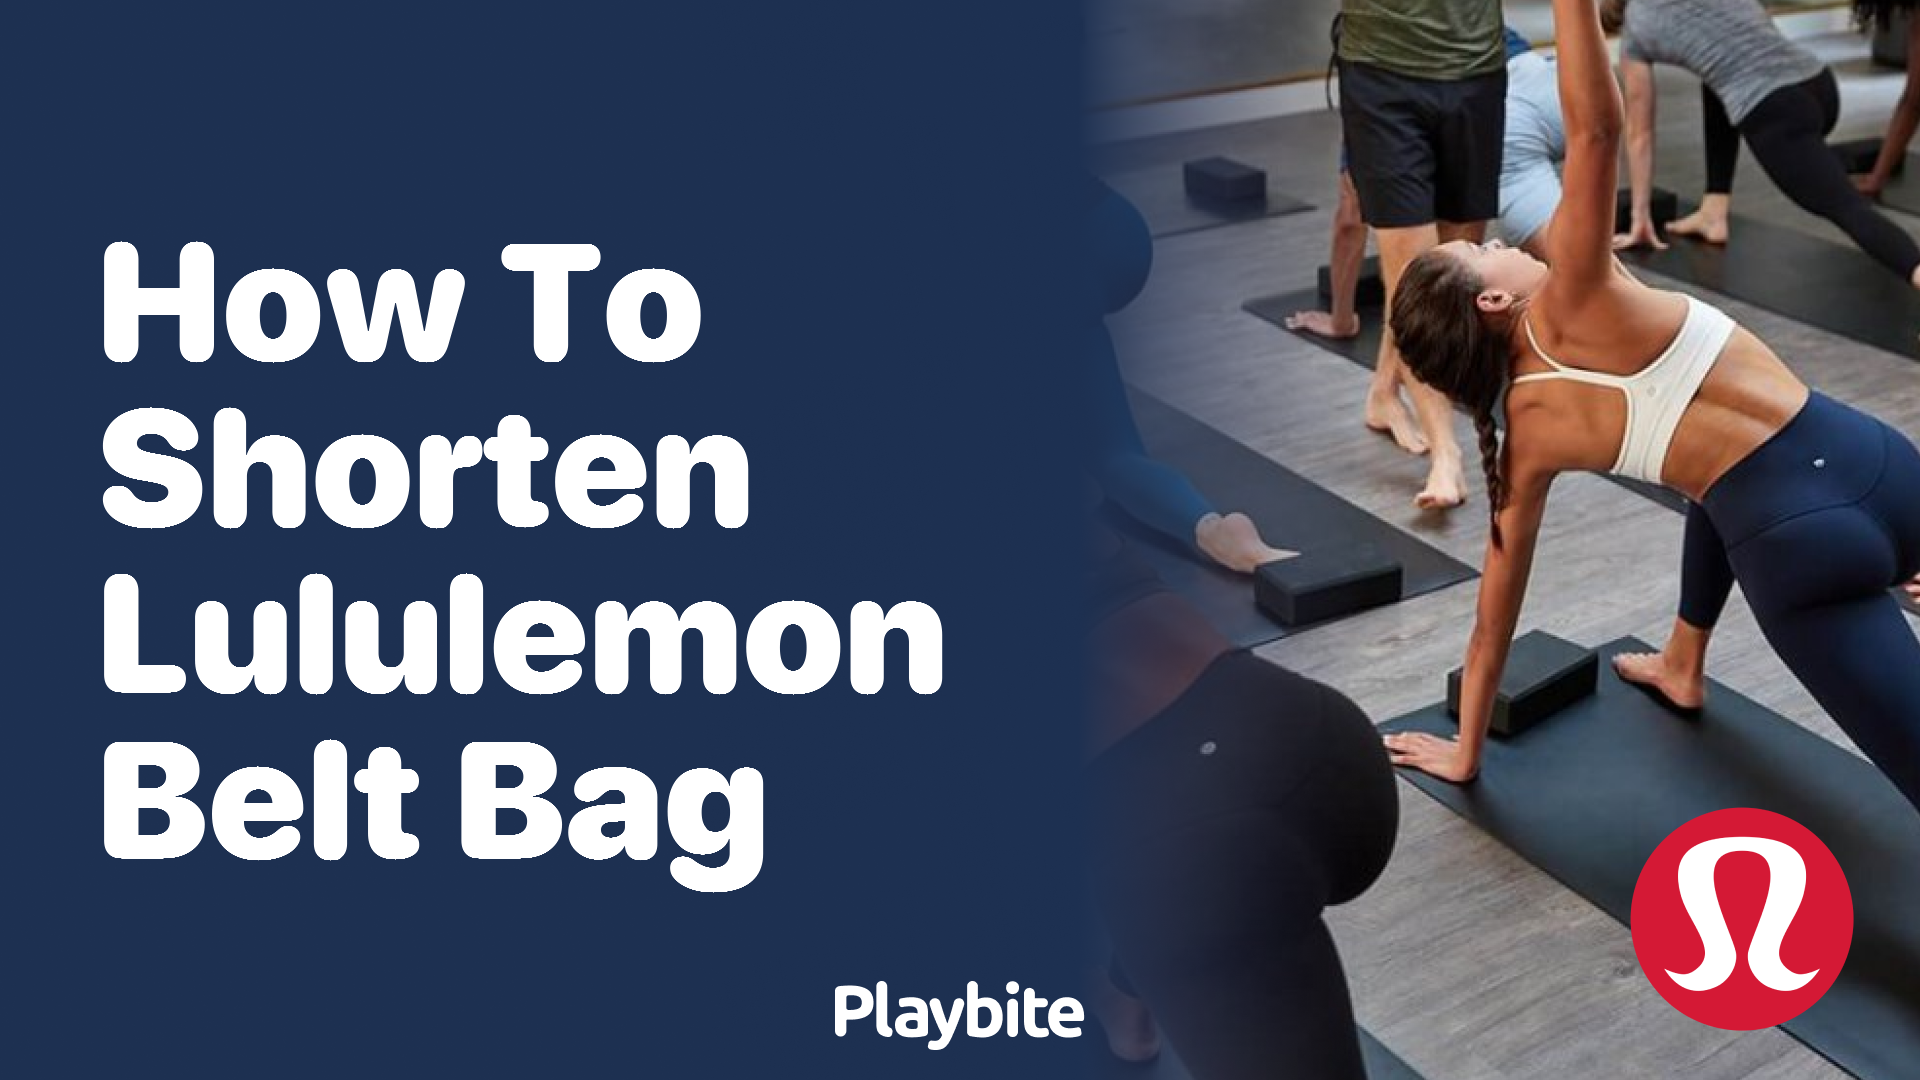 How to Shorten a Lululemon Belt Bag: A Simple Guide